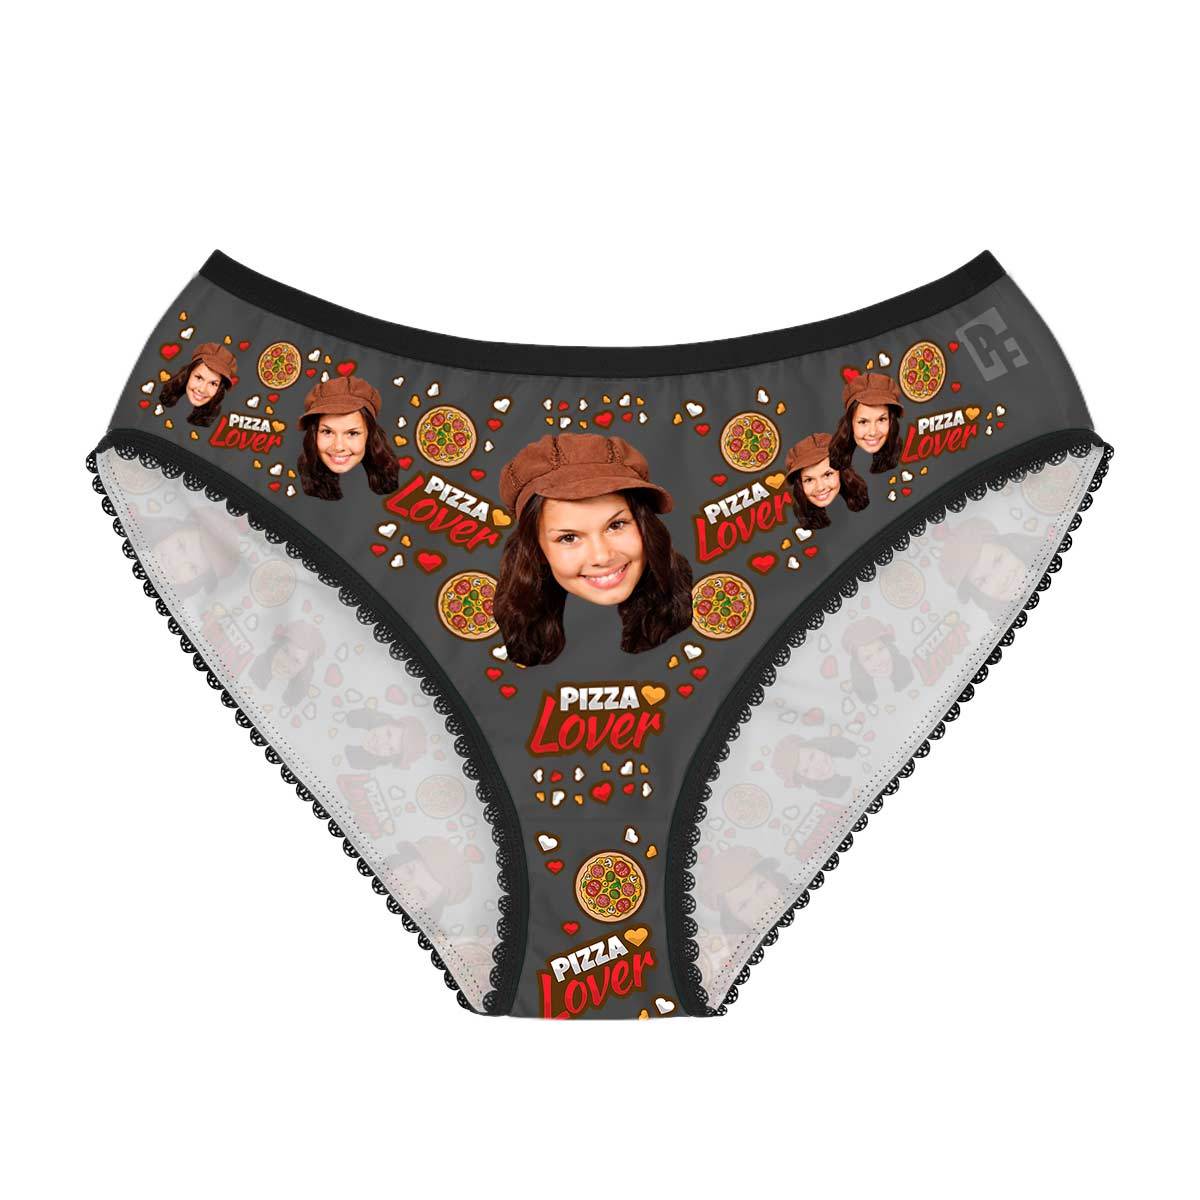 Dark Pizza Lover women's underwear briefs personalized with photo printed on them